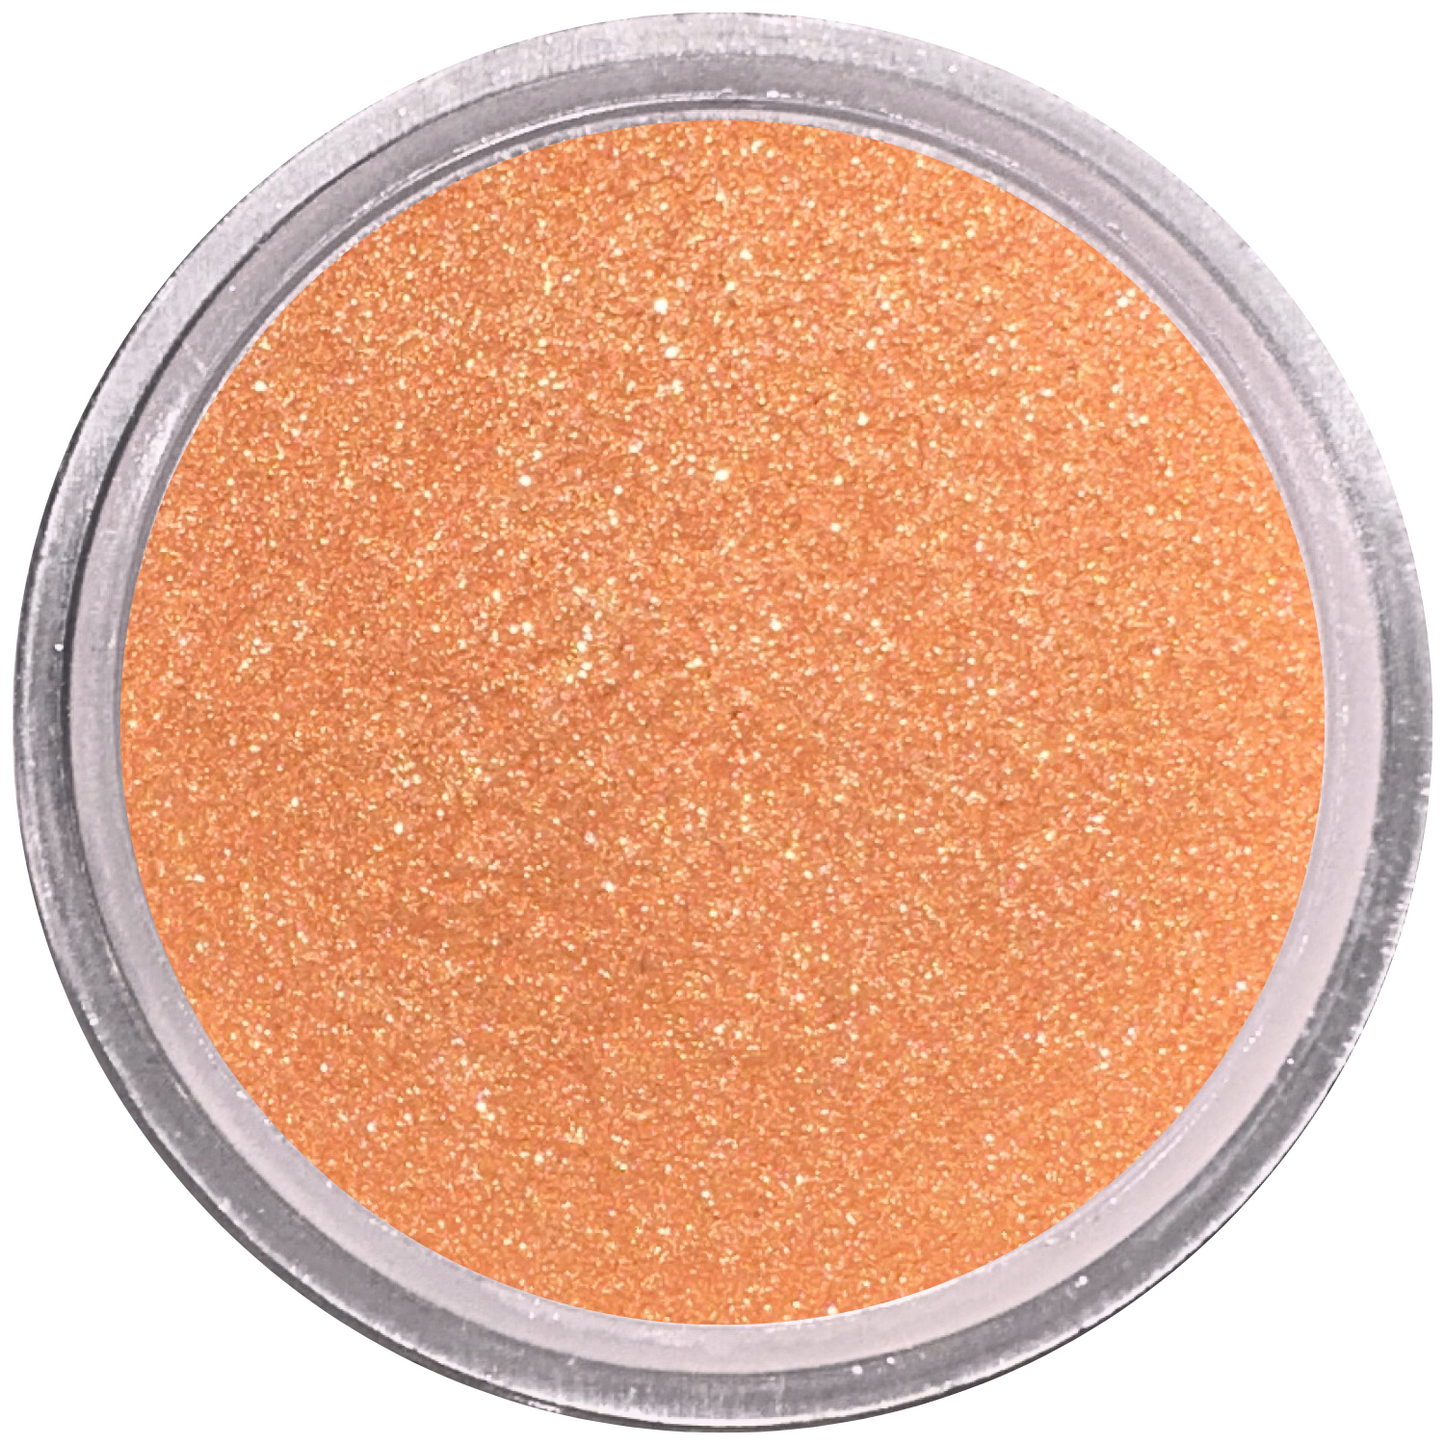 Desert Gold Loose Powder Mineral Eyeshadow Single 3g